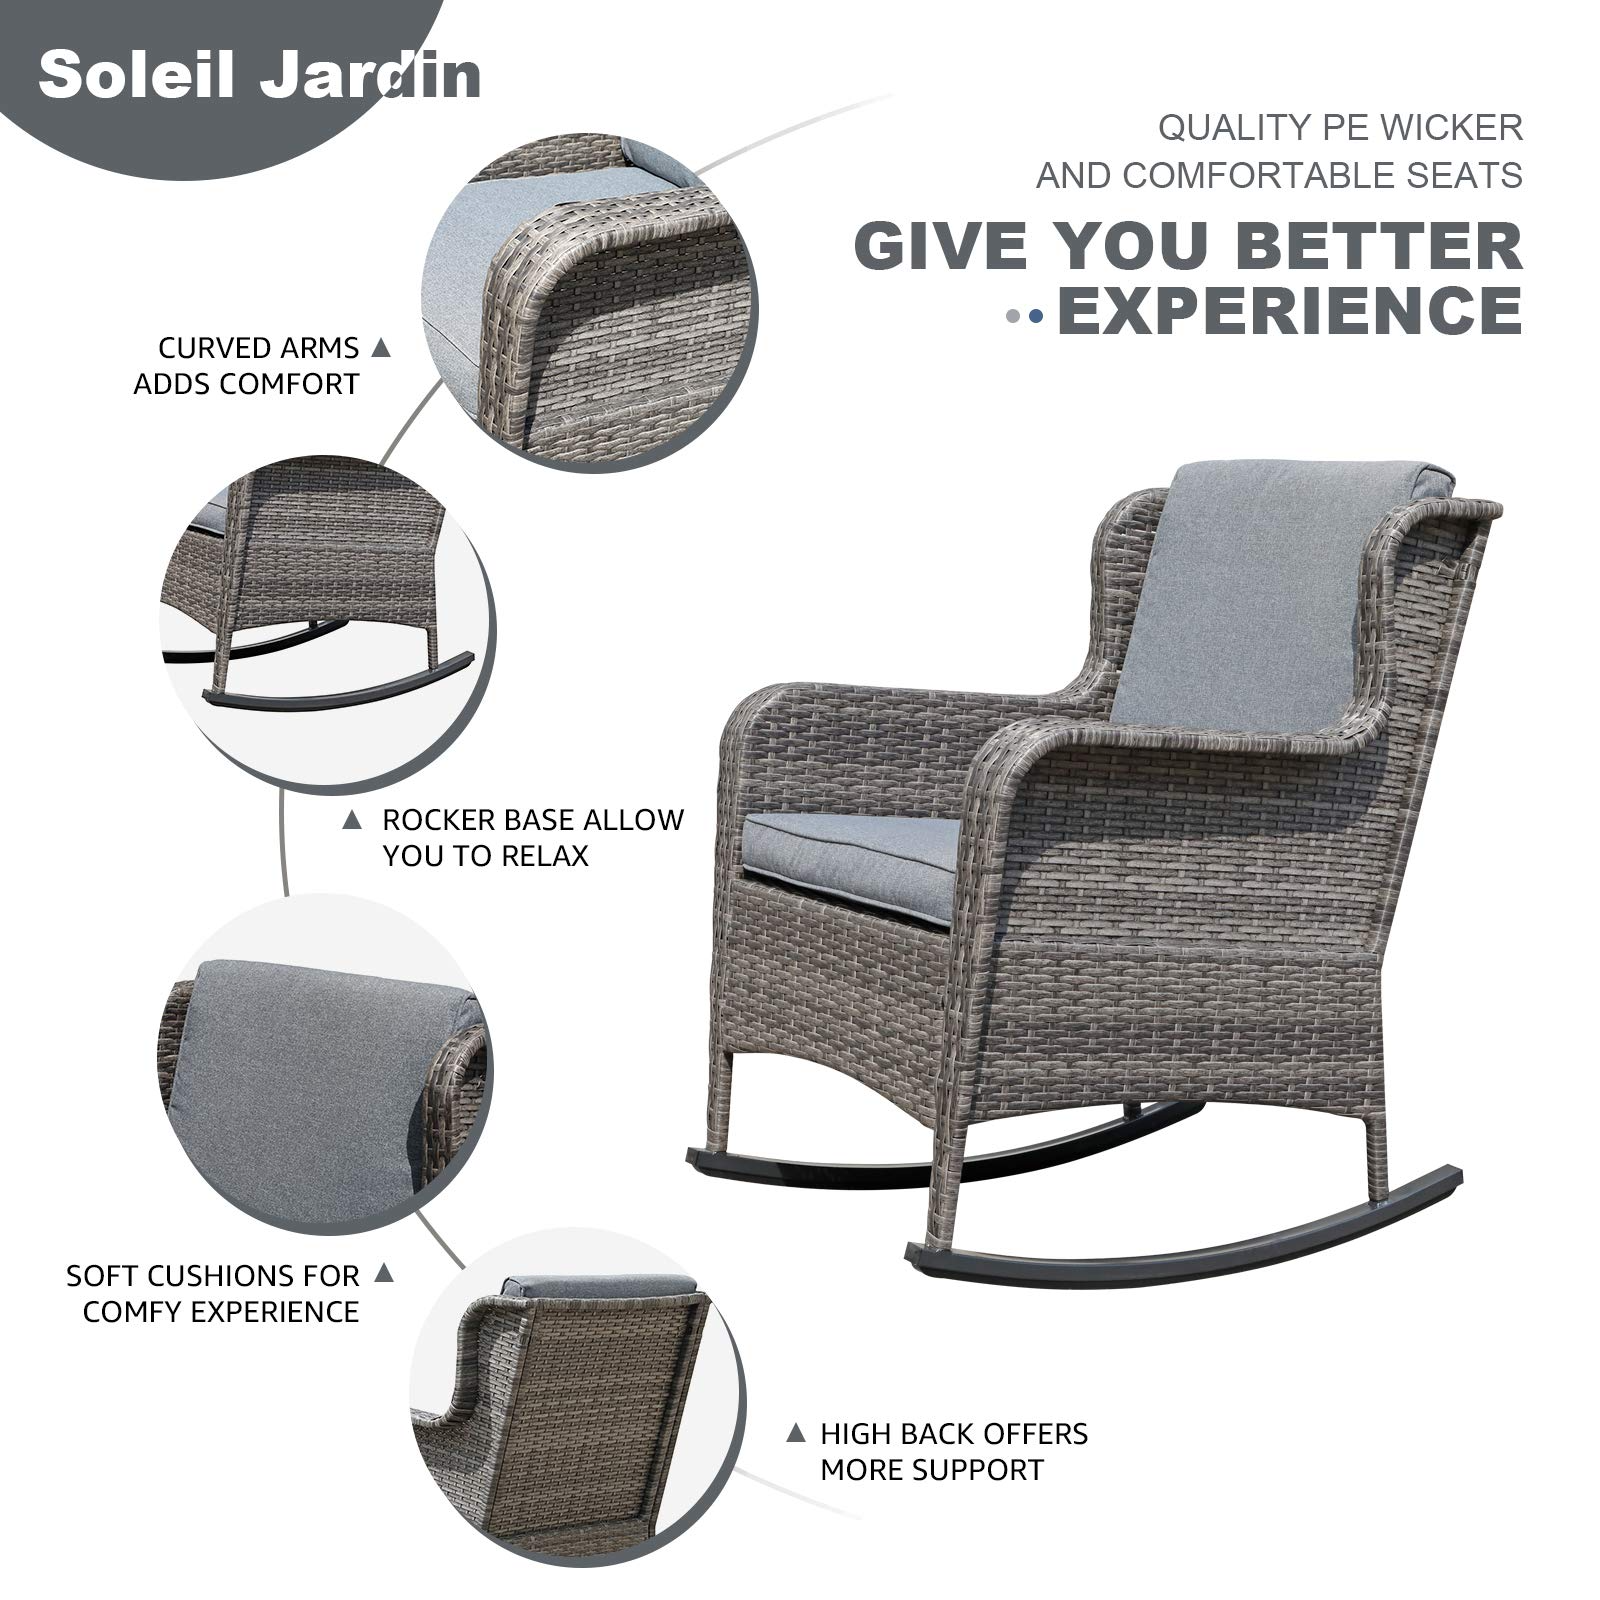 Soleil Jardin Wicker High Back & Slat Back Rocking Chair, Gray - image 4 of 7